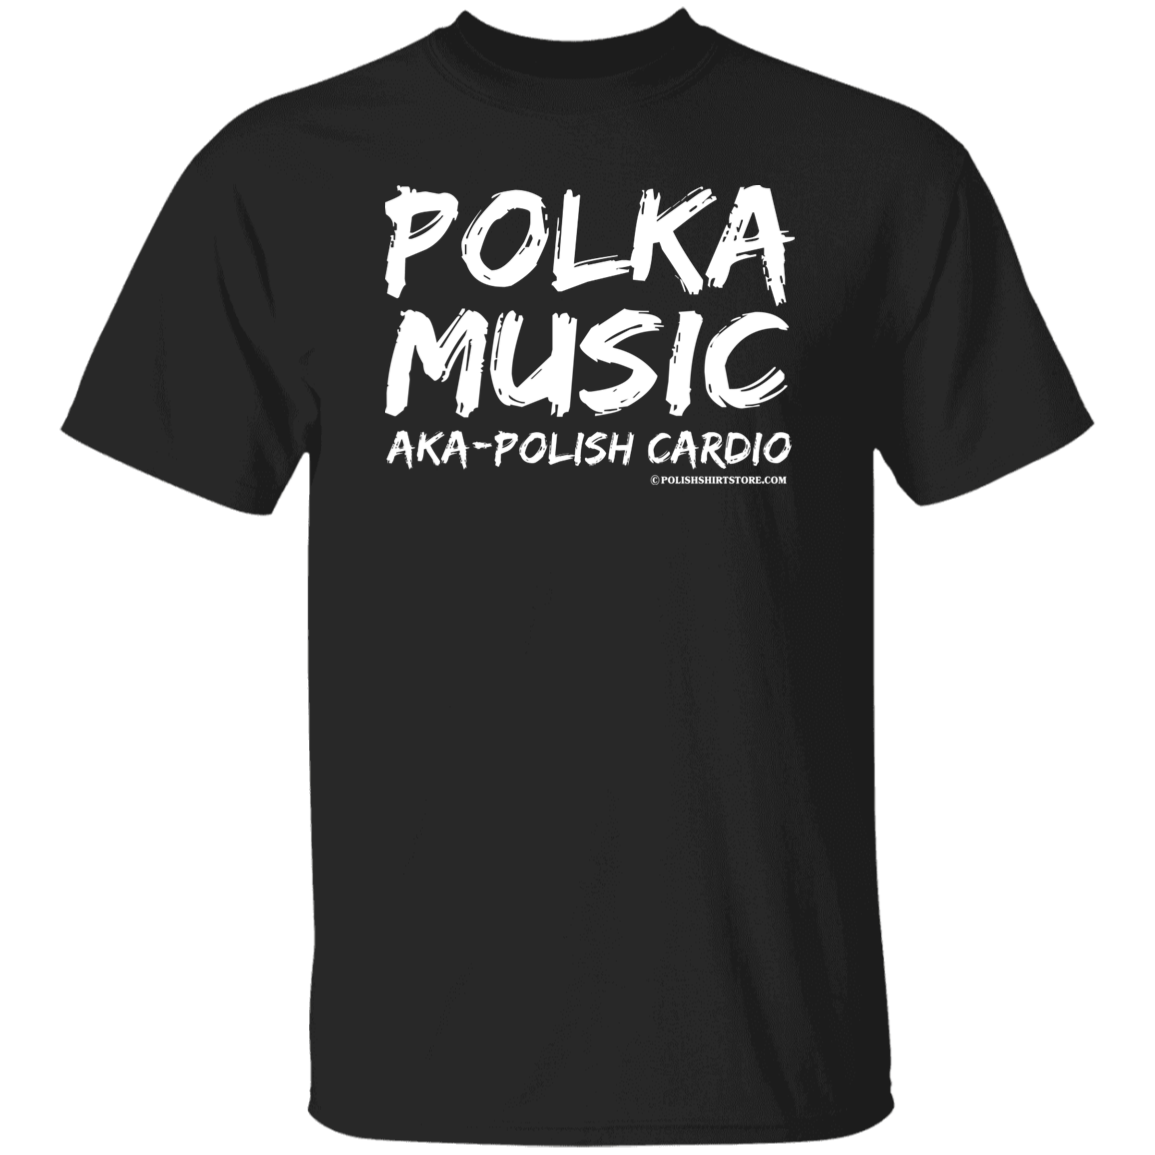 Polka Music AKA Polish Cardio Apparel CustomCat G500 5.3 oz. T-Shirt Black S